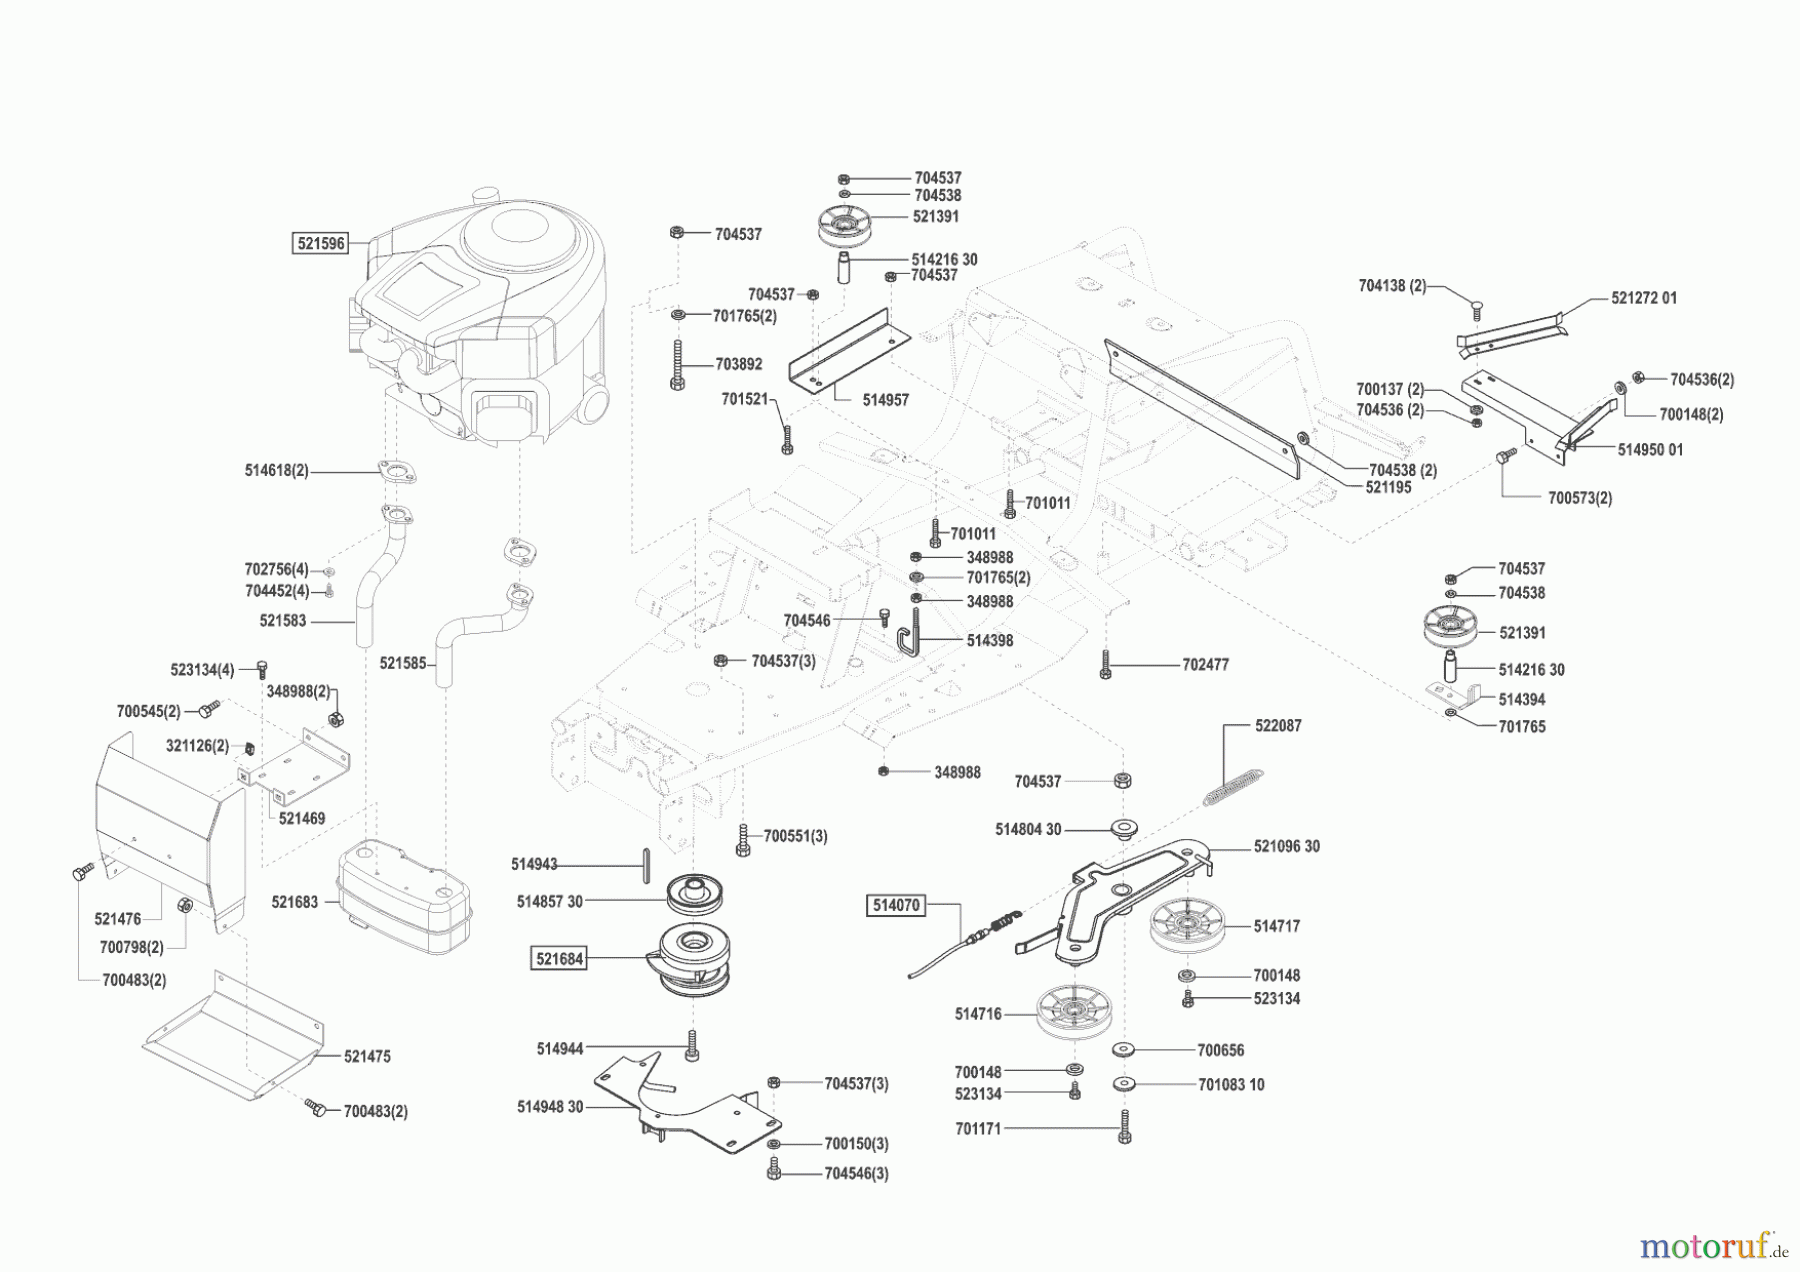  Sigma Gartentechnik Rasentraktor T18-102 HD  09/2002 Seite 4